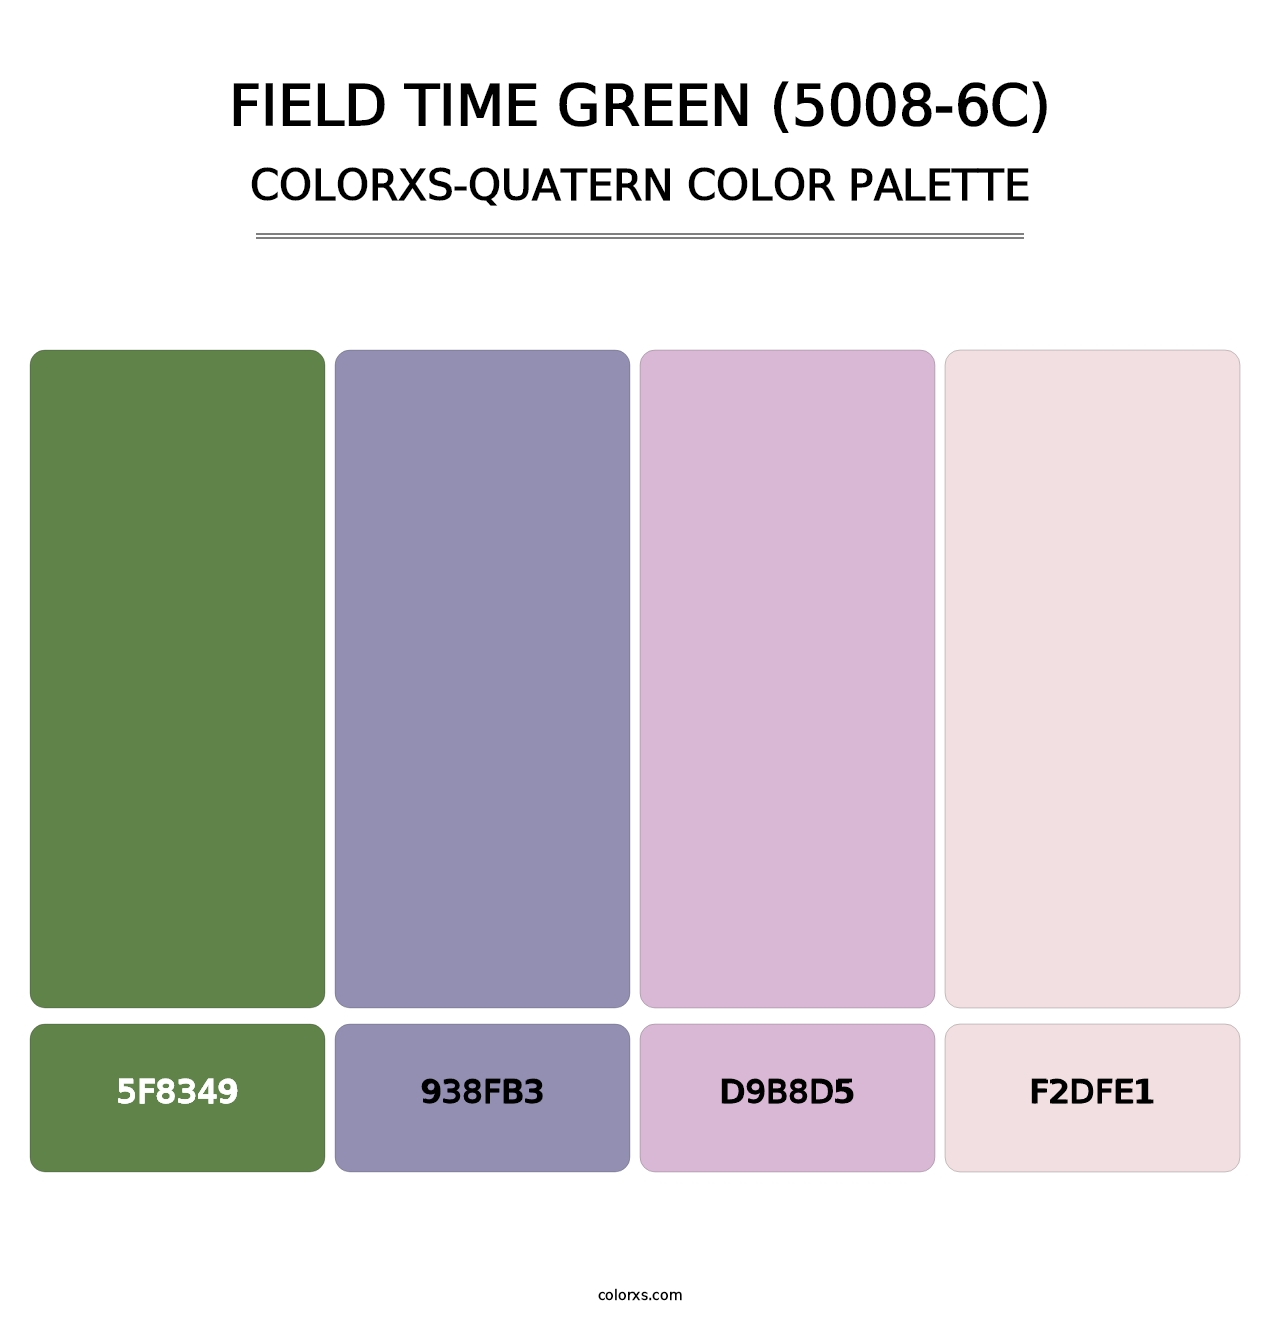 Field Time Green (5008-6C) - Colorxs Quatern Palette